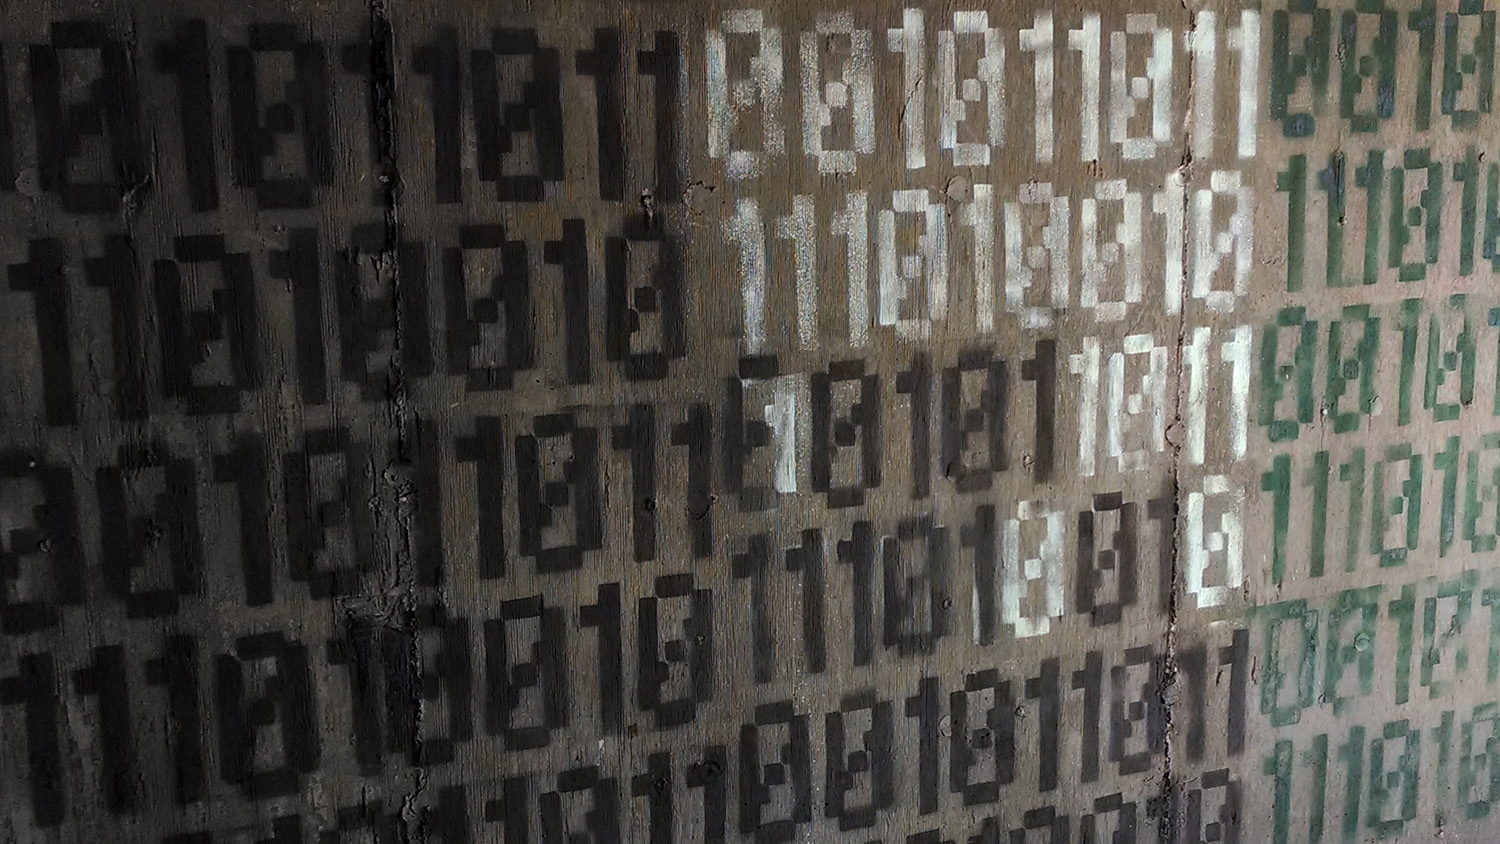 binary code spraypainted on wall